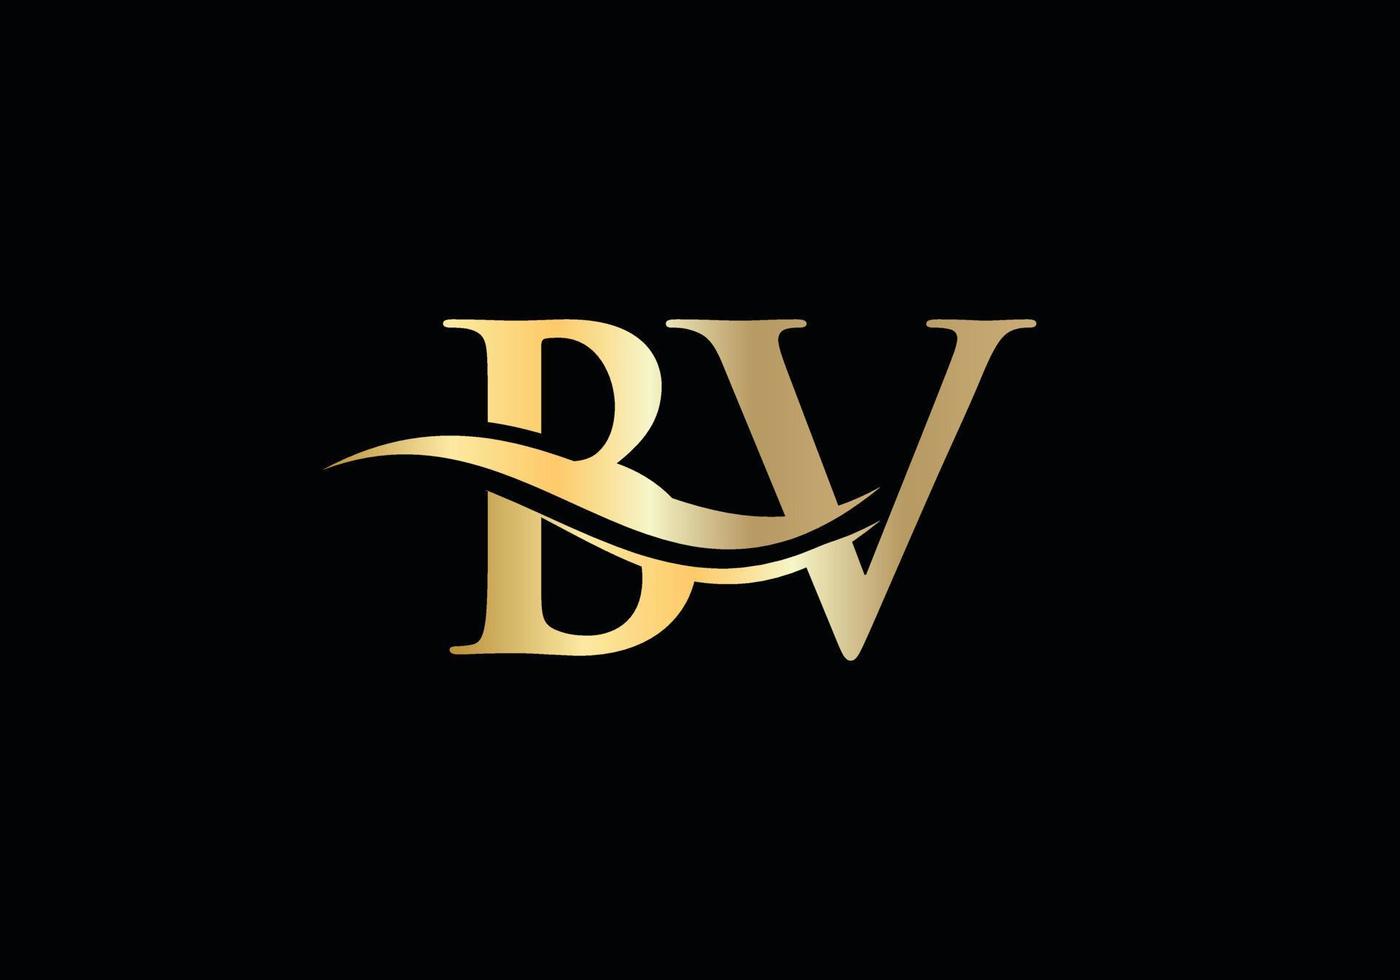 design de logotipo inicial de letra vinculada bv. vetor de design de logotipo moderno letra bv com tendência moderna